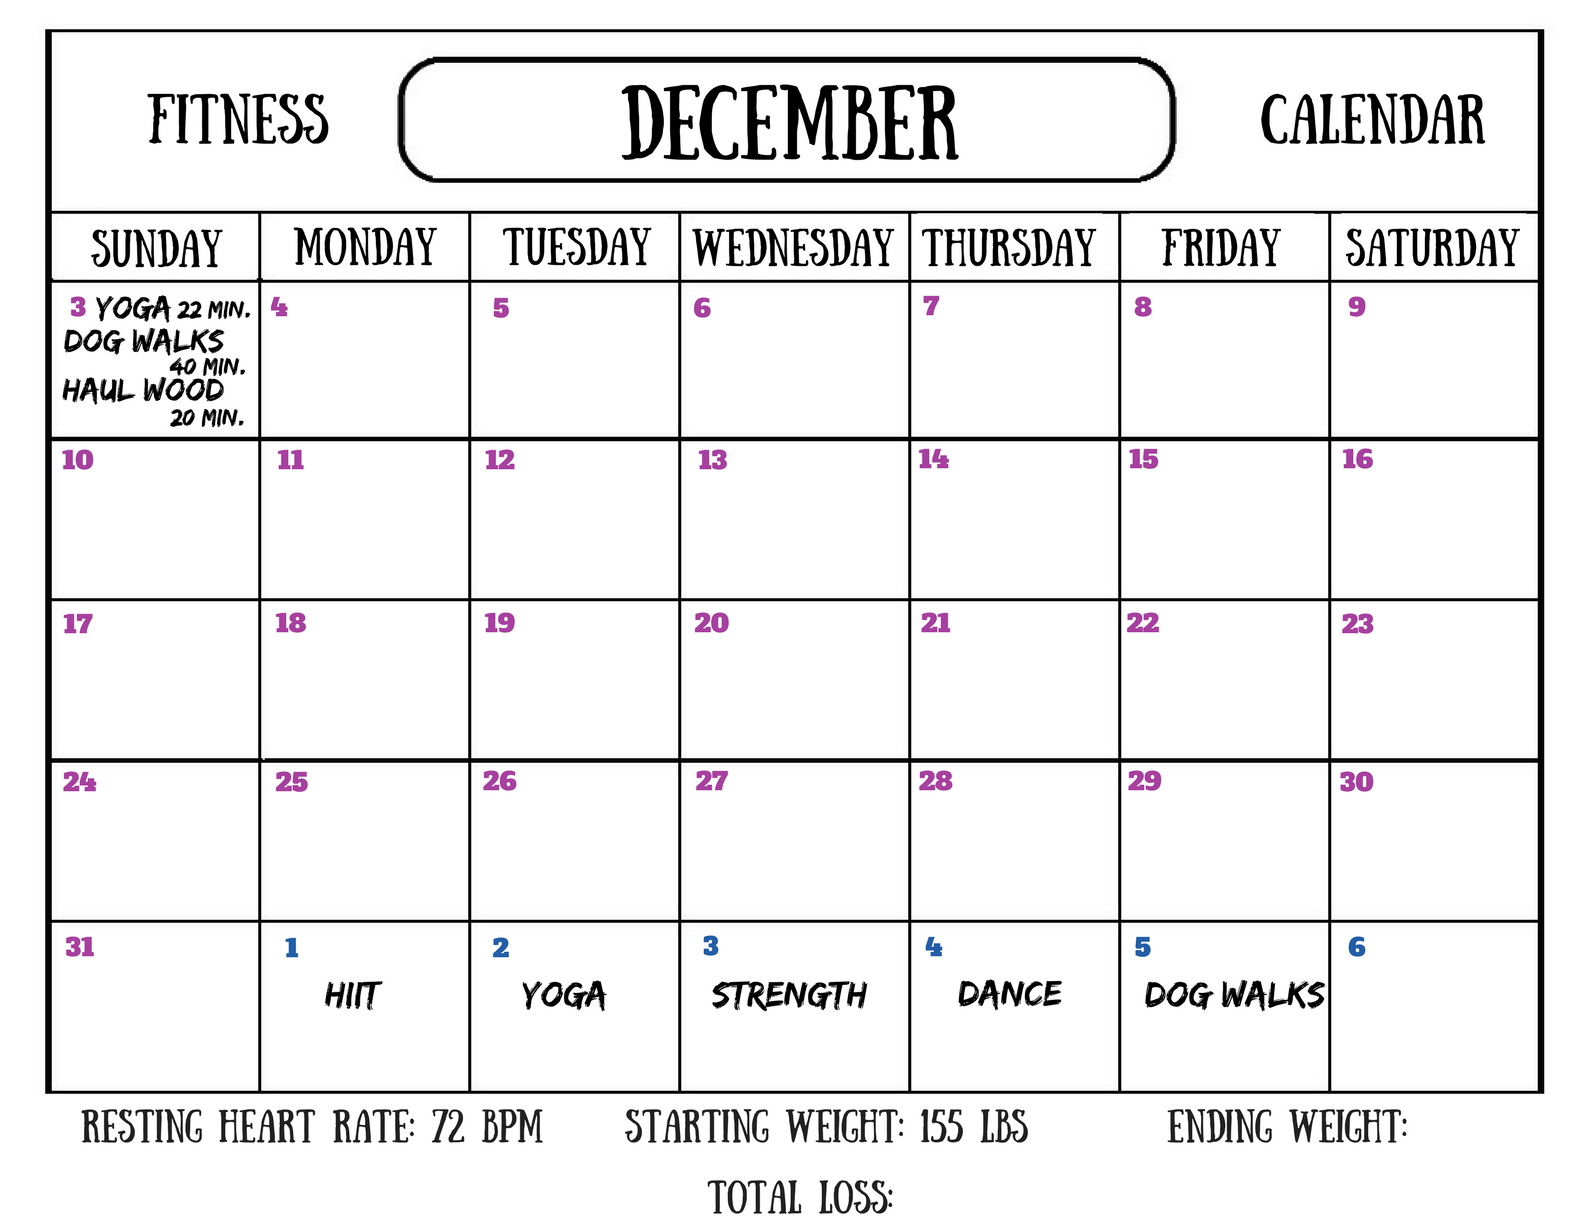 Fitness Calendar.png